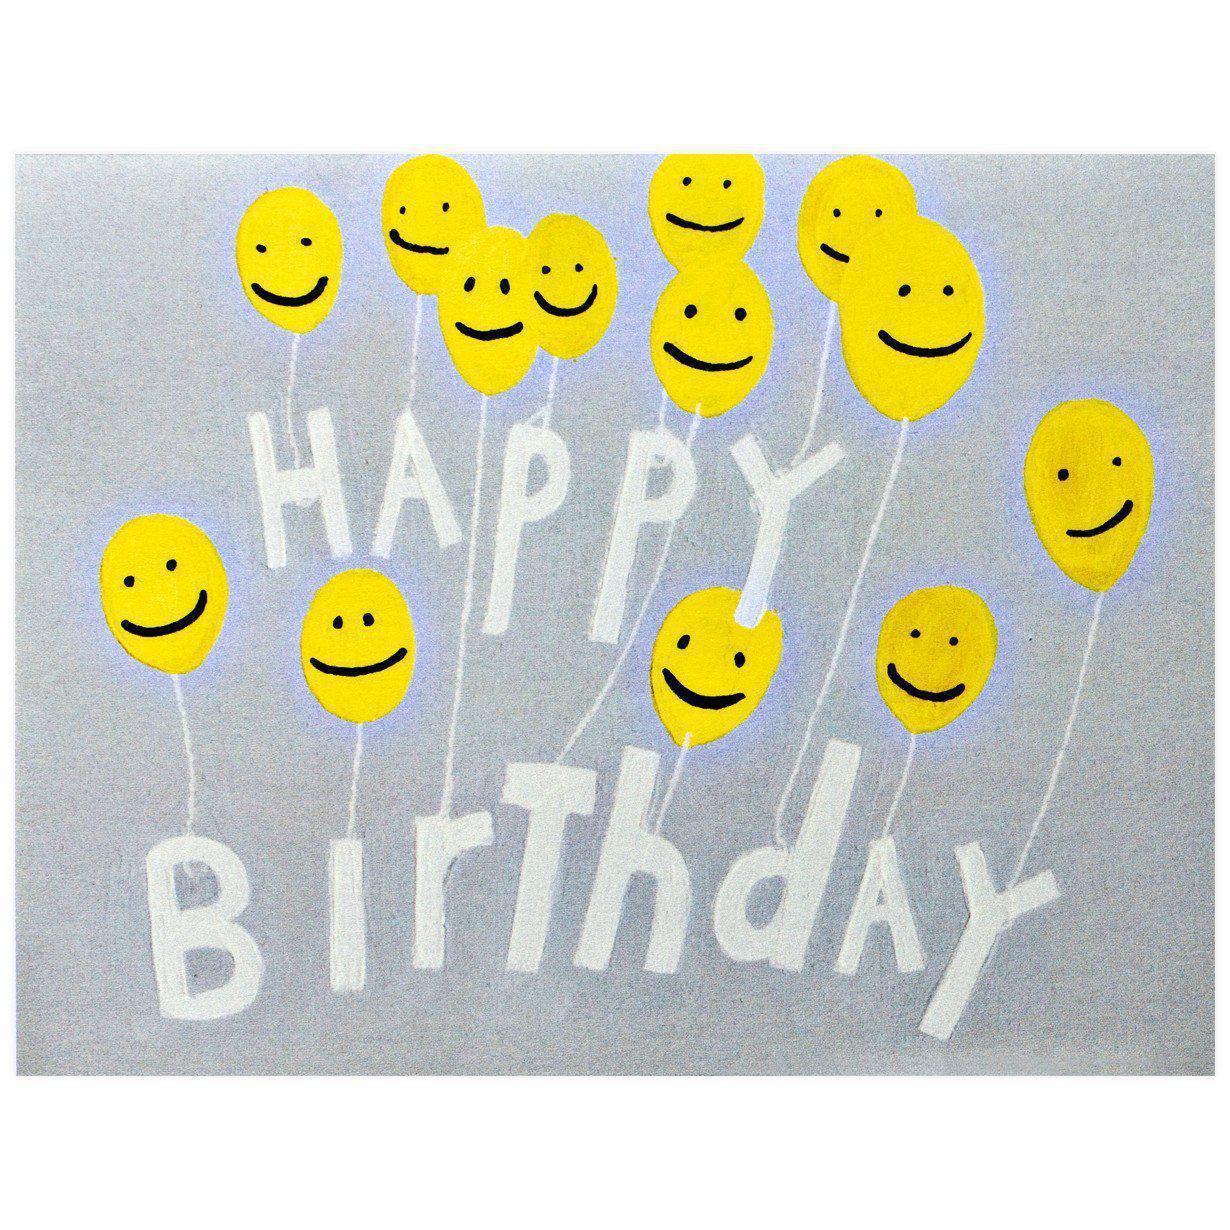 Dear Hancock Smiling Balloons Birthday Card 